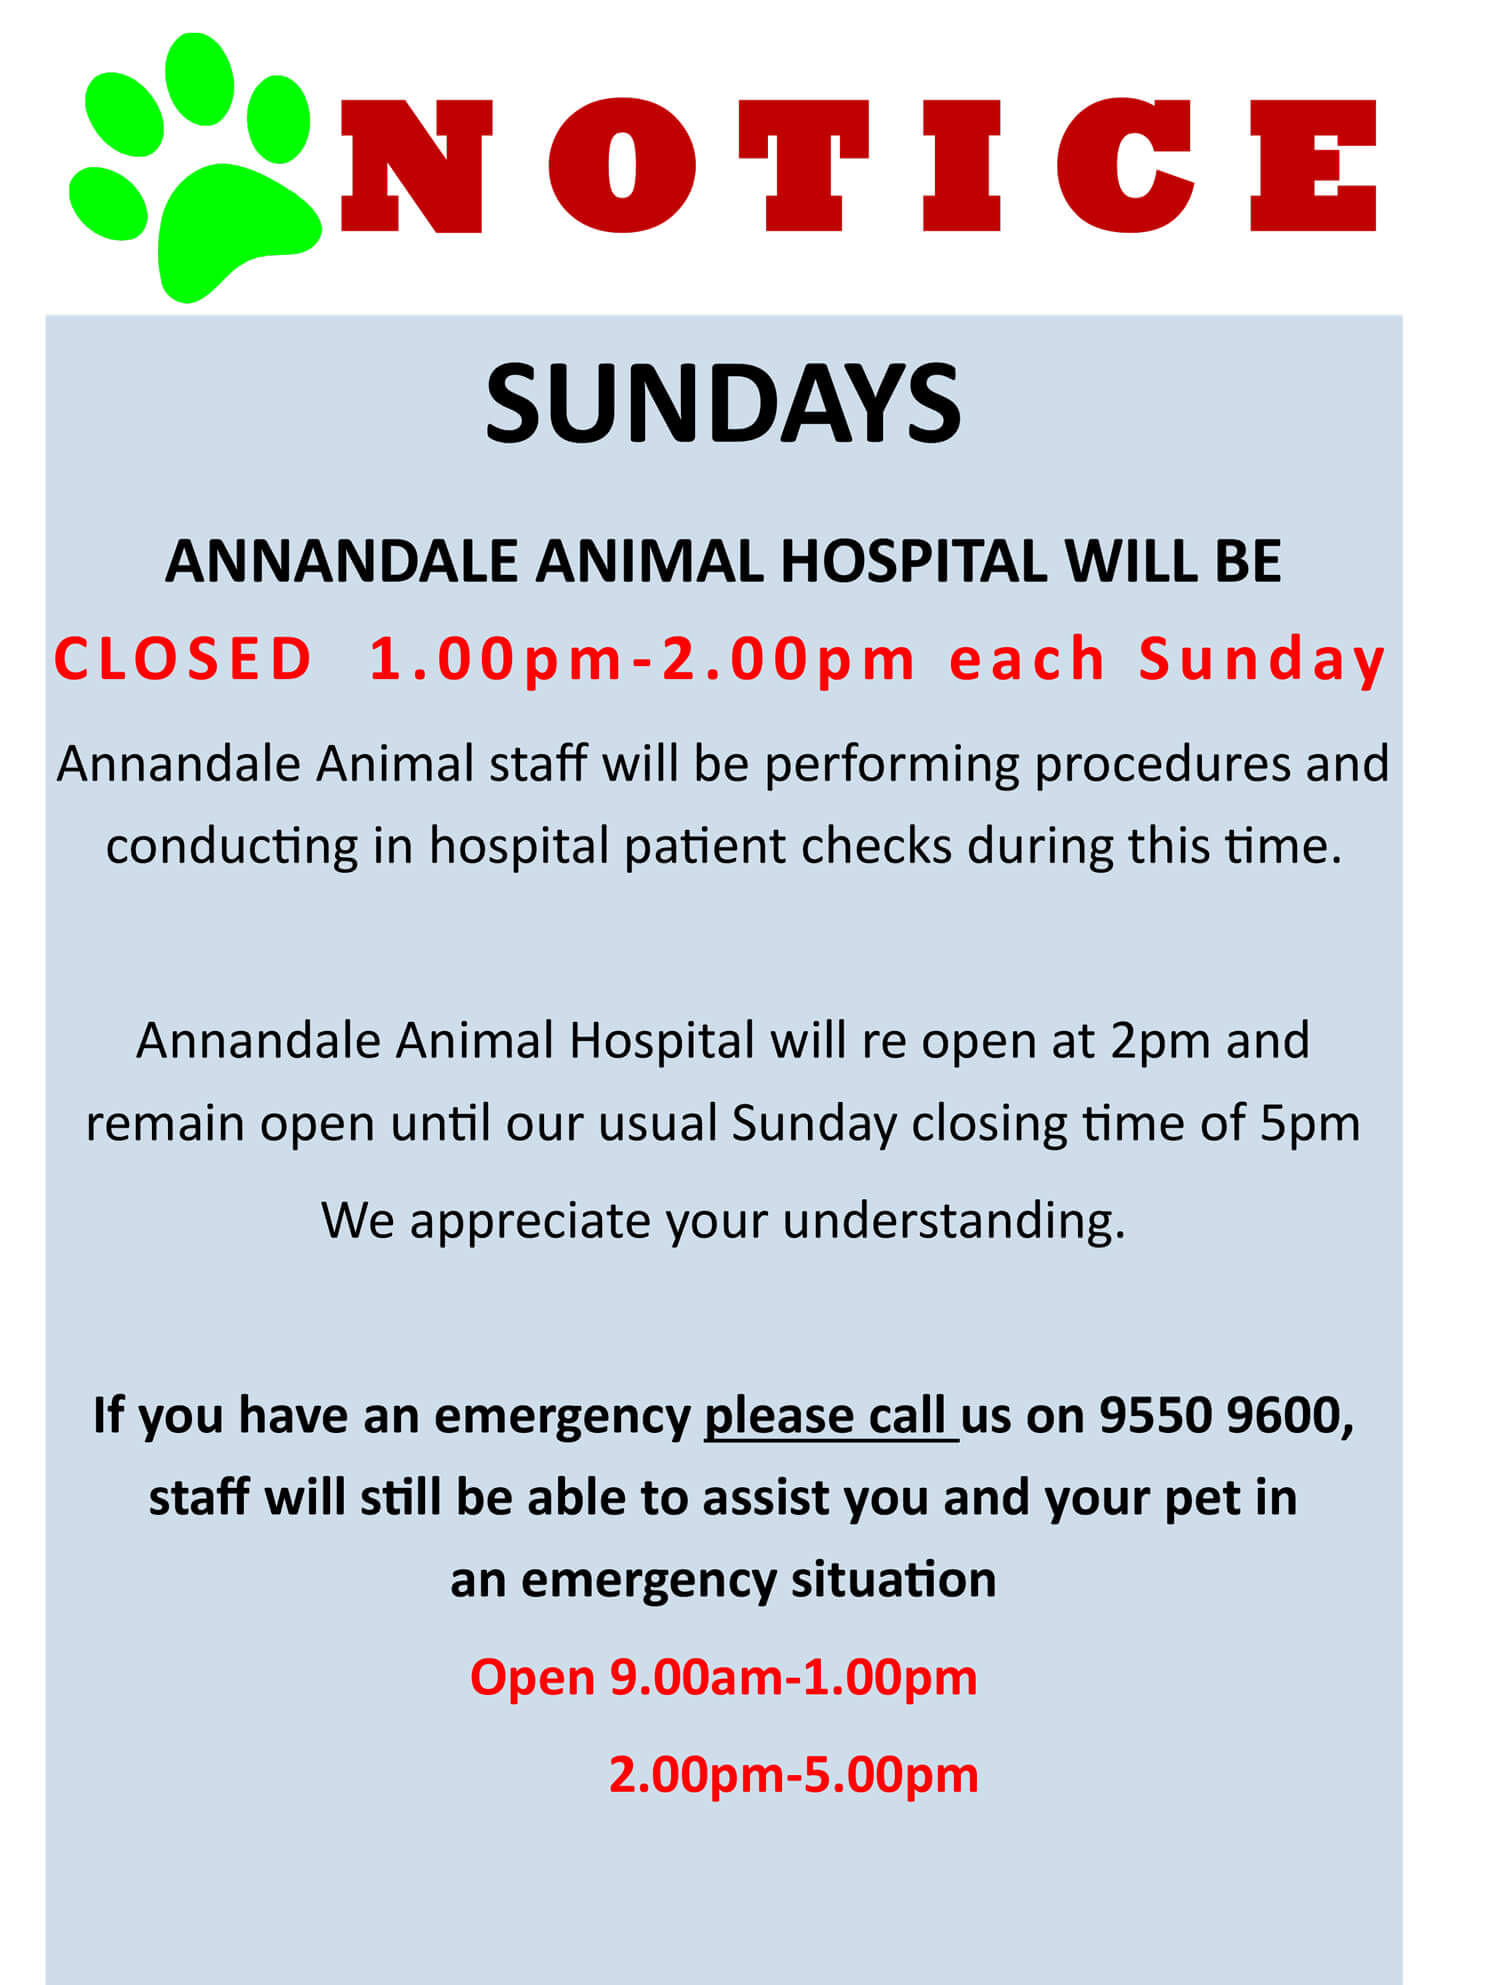 Annandale Animal Hospital: Quality Pet Care & Advice - Open Mon - Fri